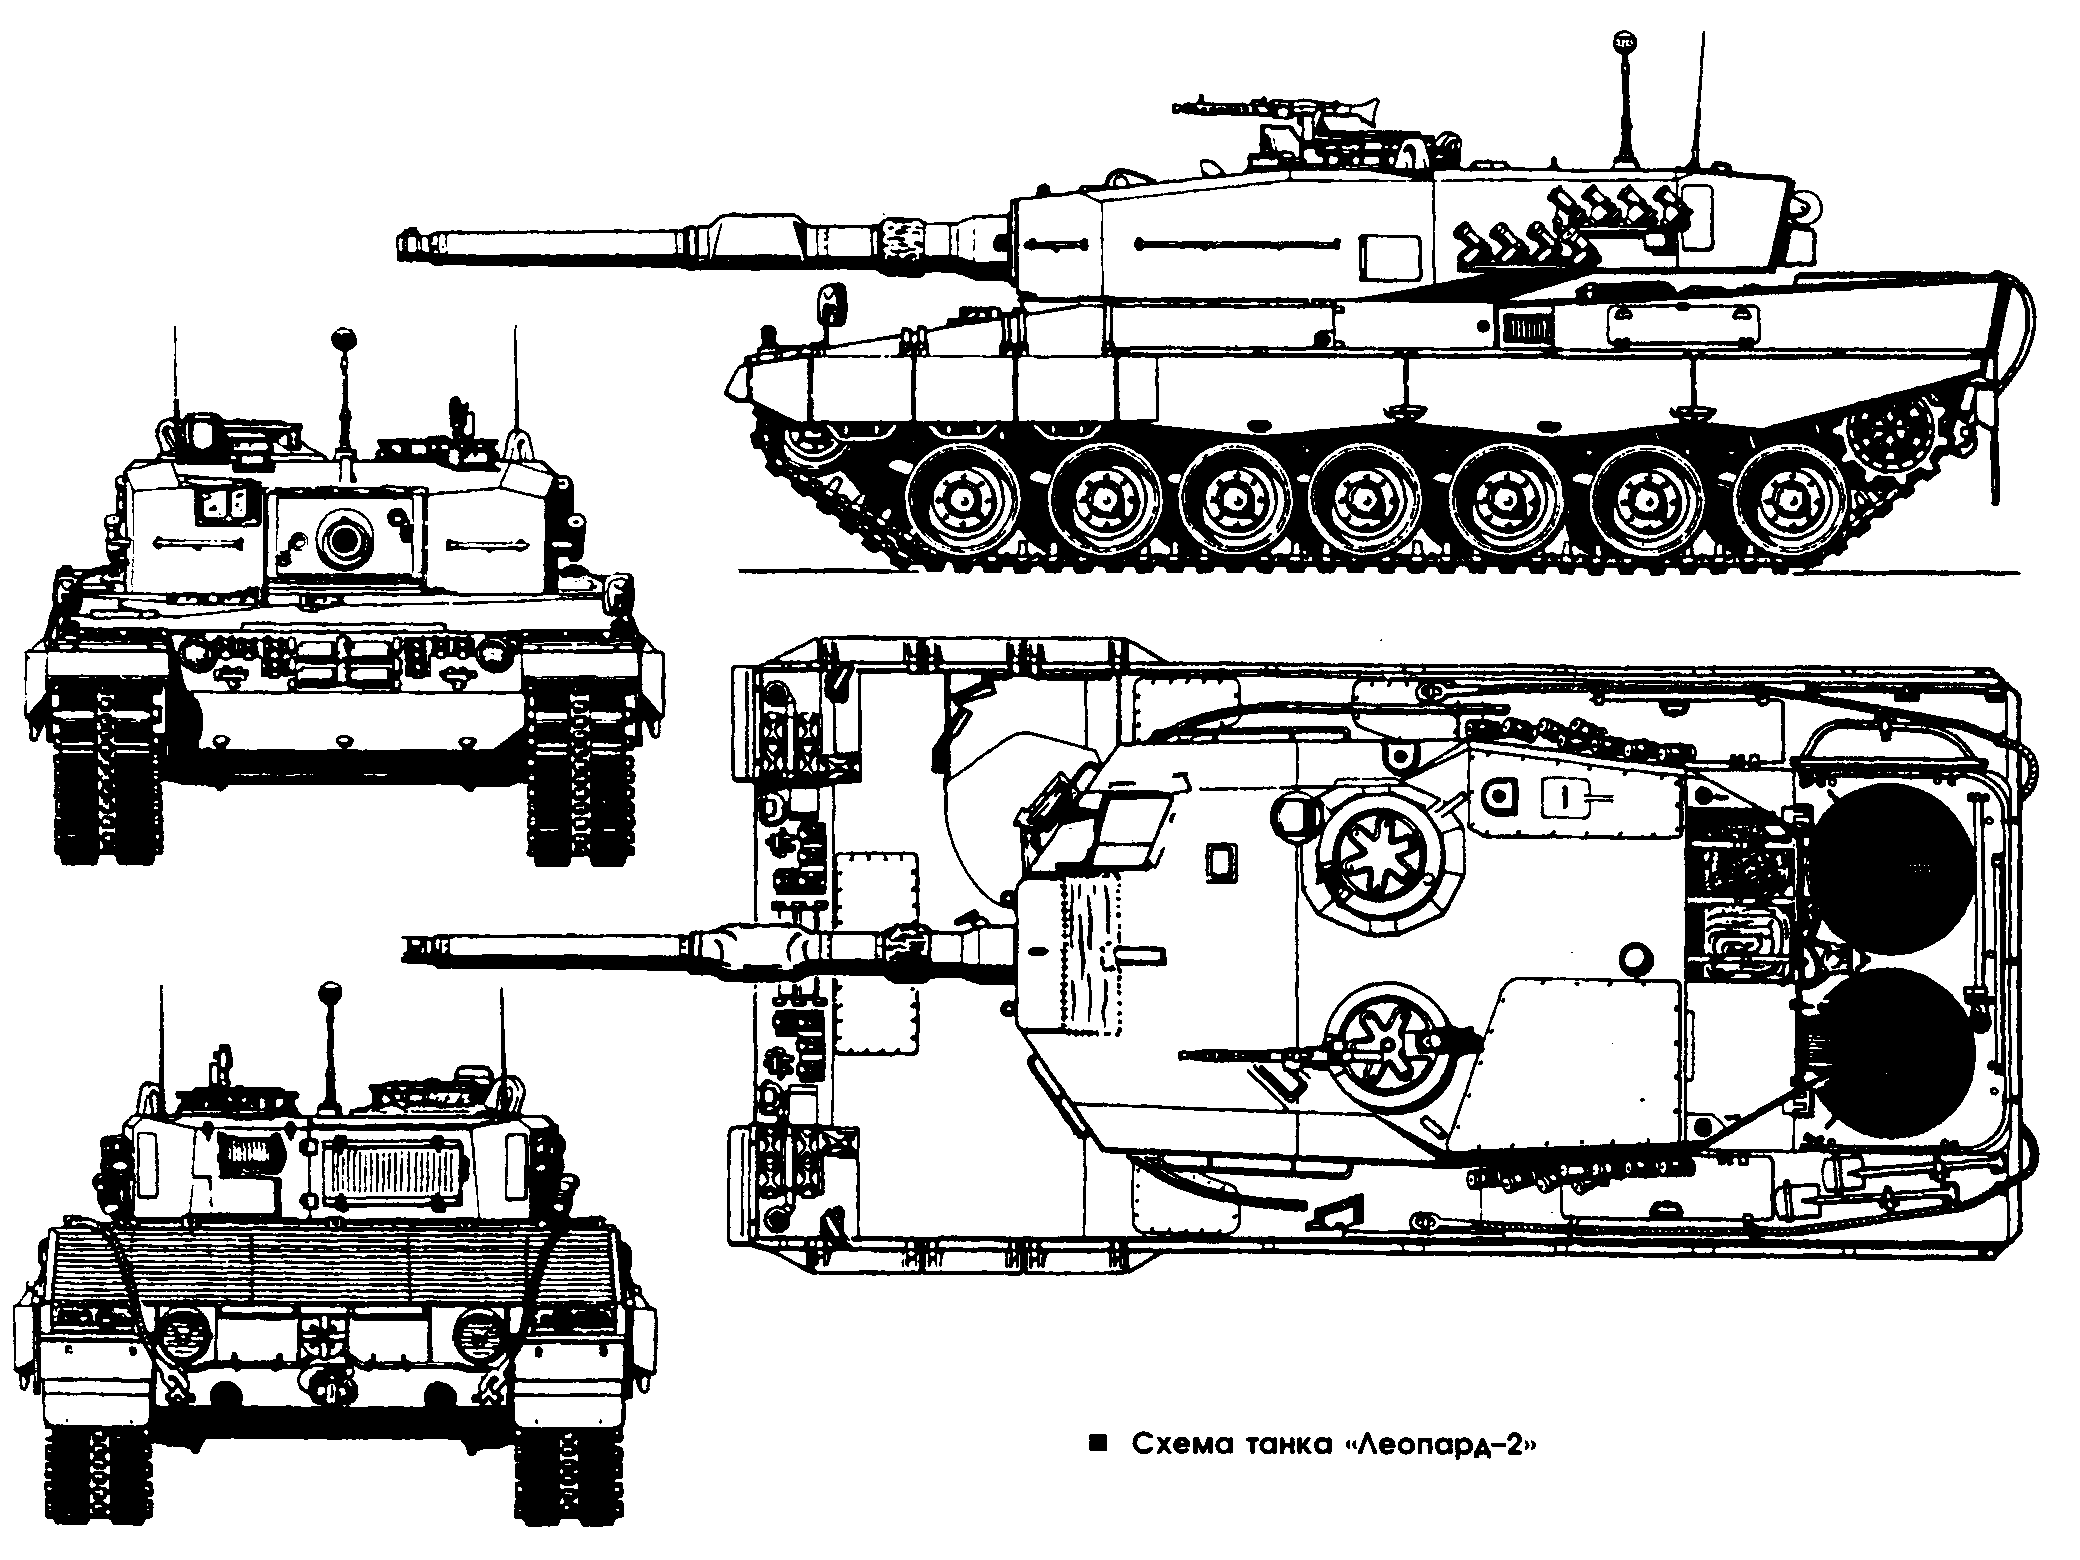 http://armor.kiev.ua/Tanks/Modern/Leopard2/Leo2.gif